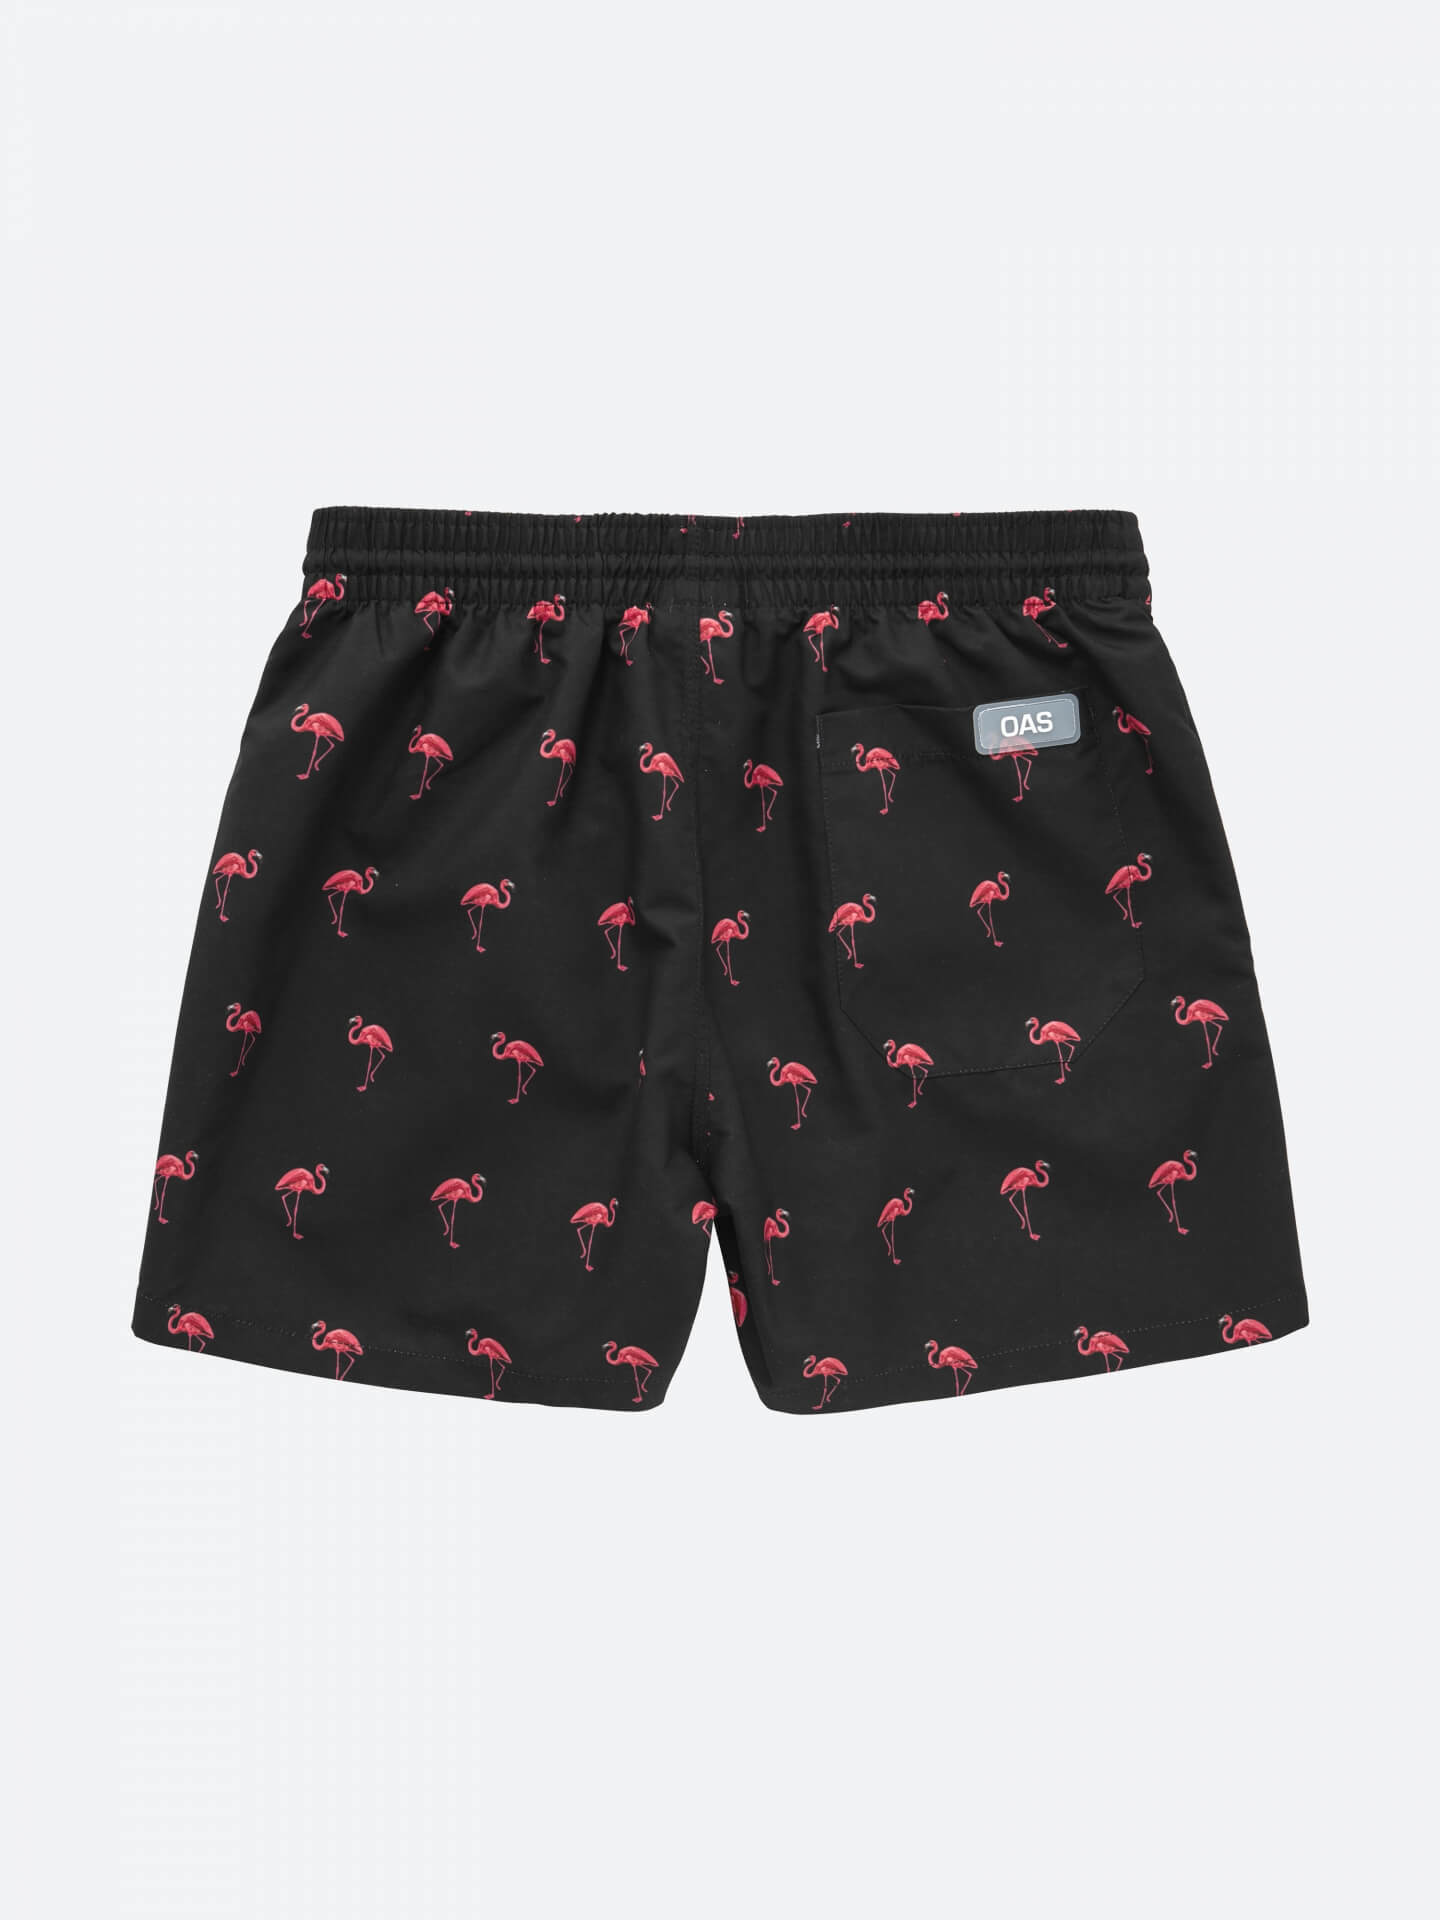 Oas Swimwear Black Flamingo - Mojo Independent Store